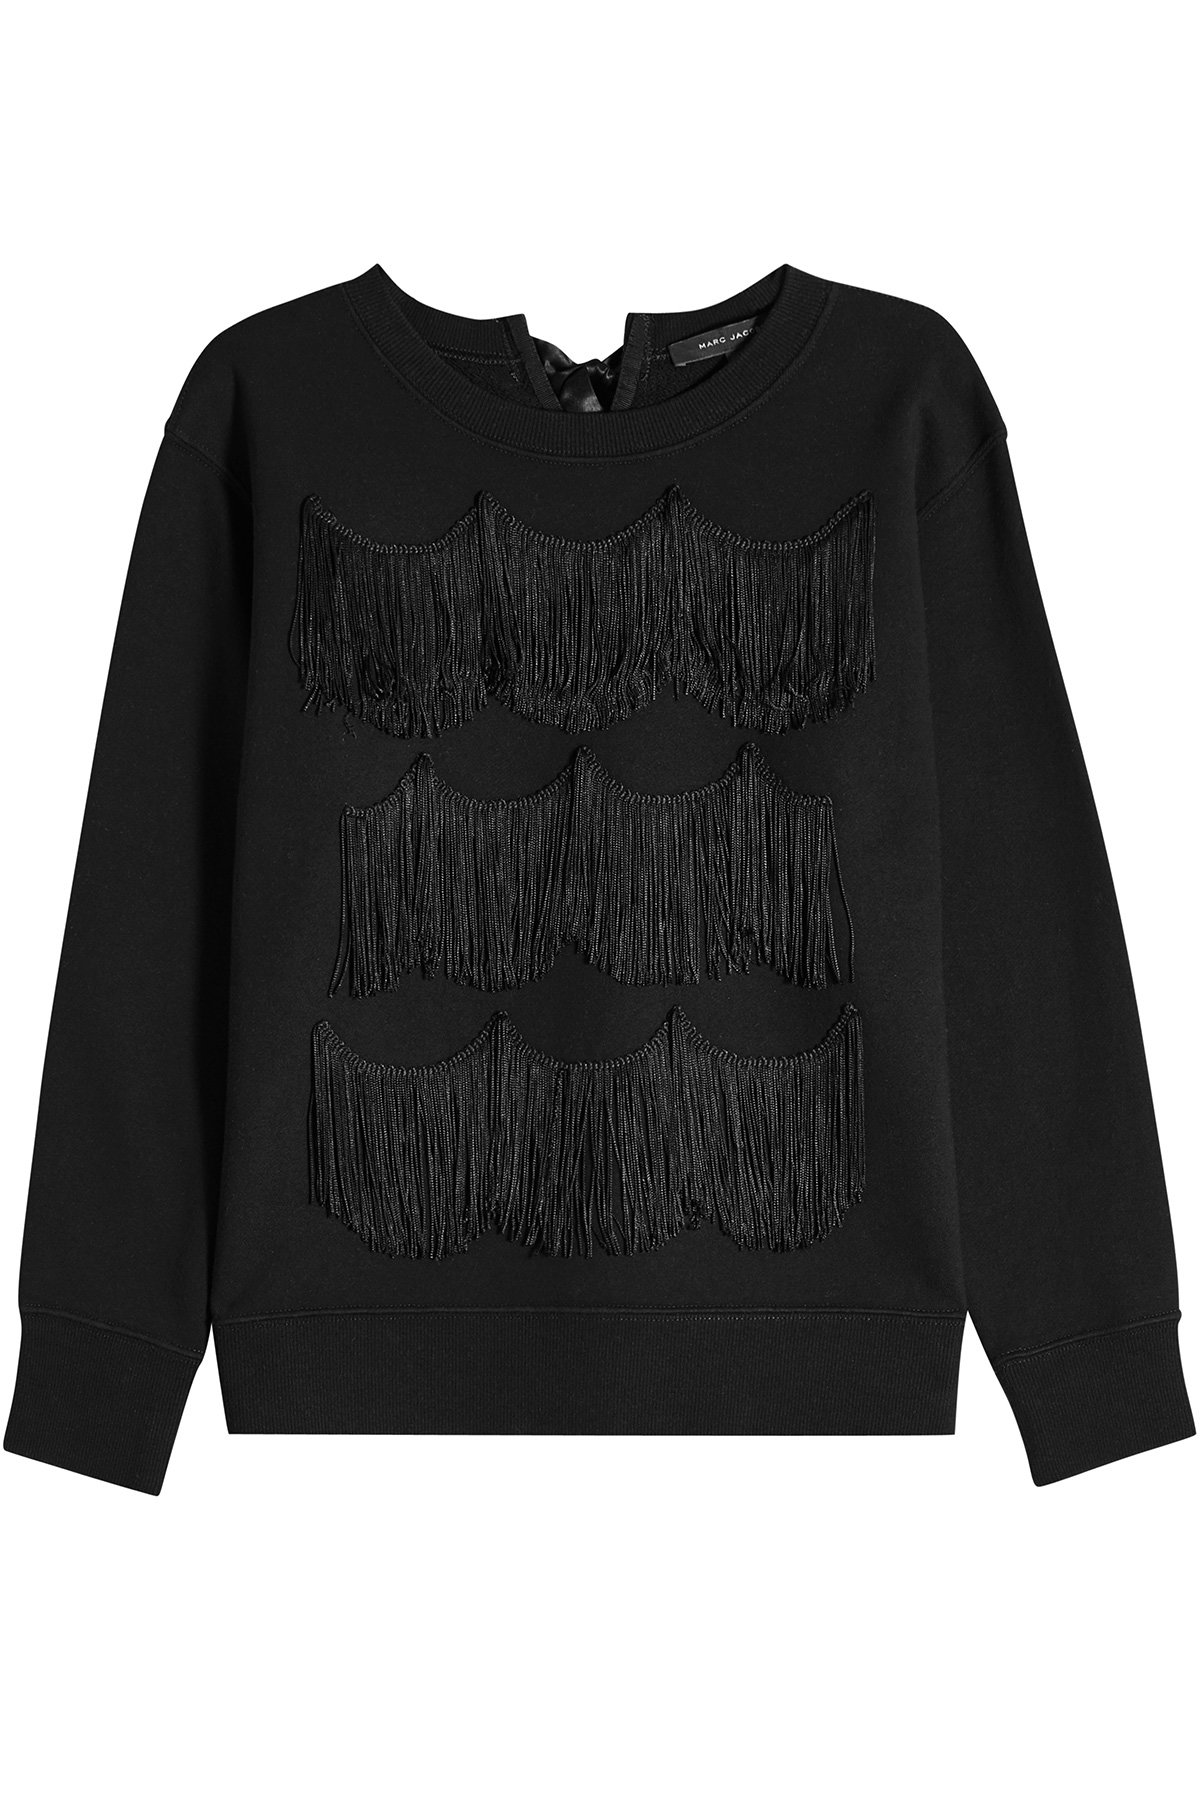 Marc Jacobs - Cotton Sweatshirt with Fringe